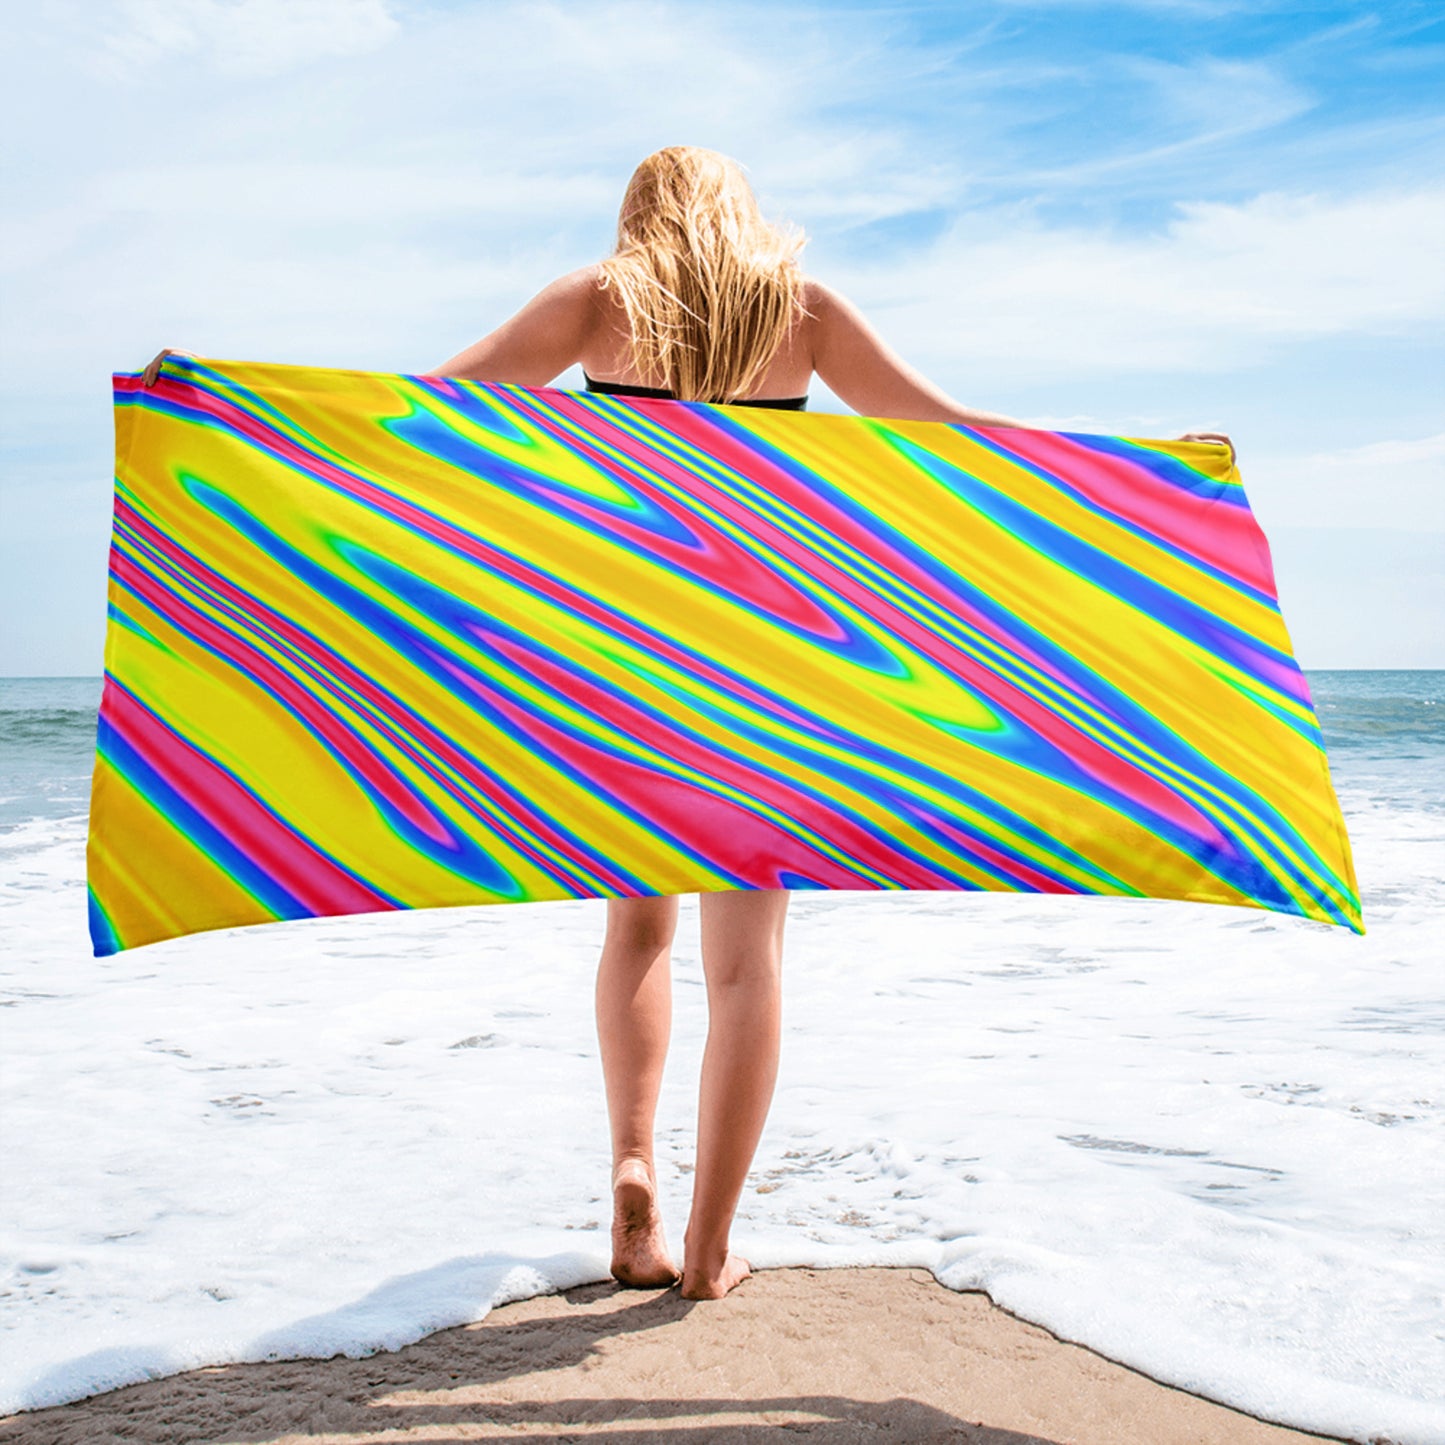 Solar Flare Trippy Towel